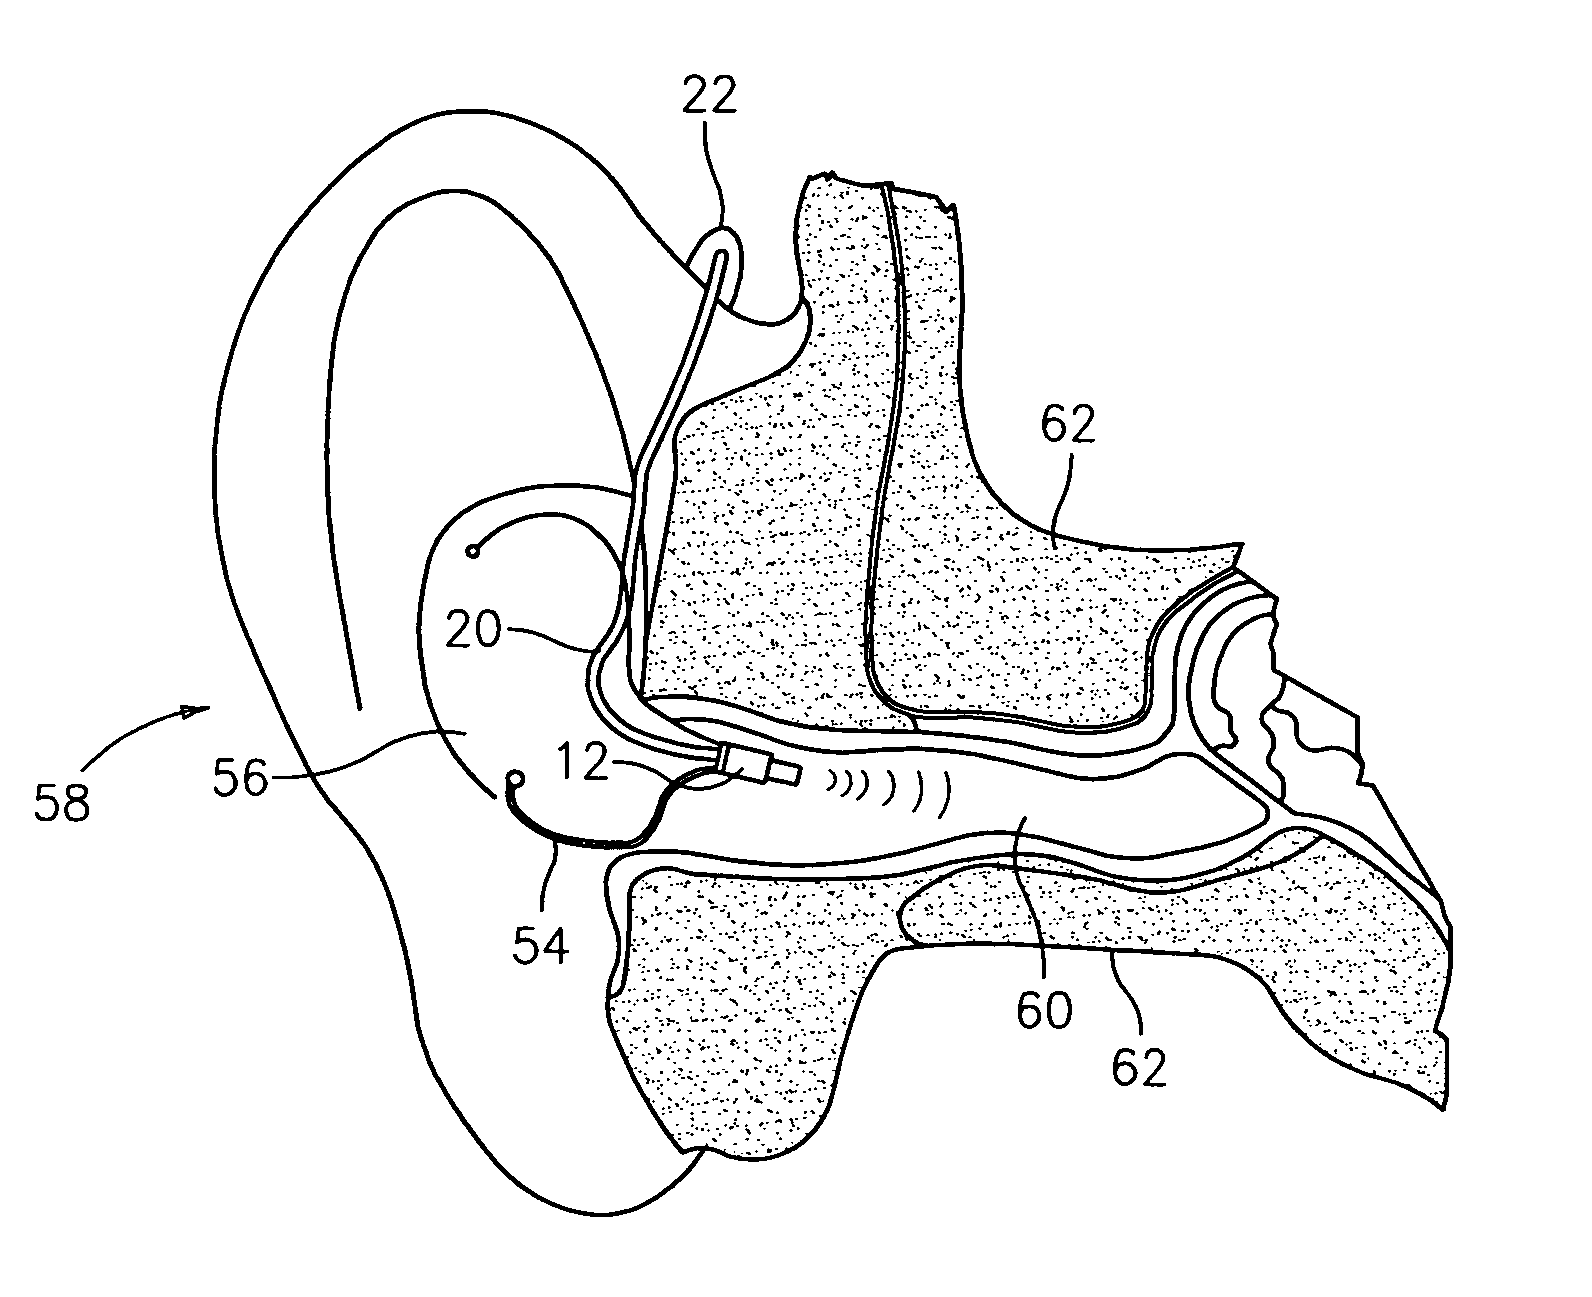 Tinnitus treatment device